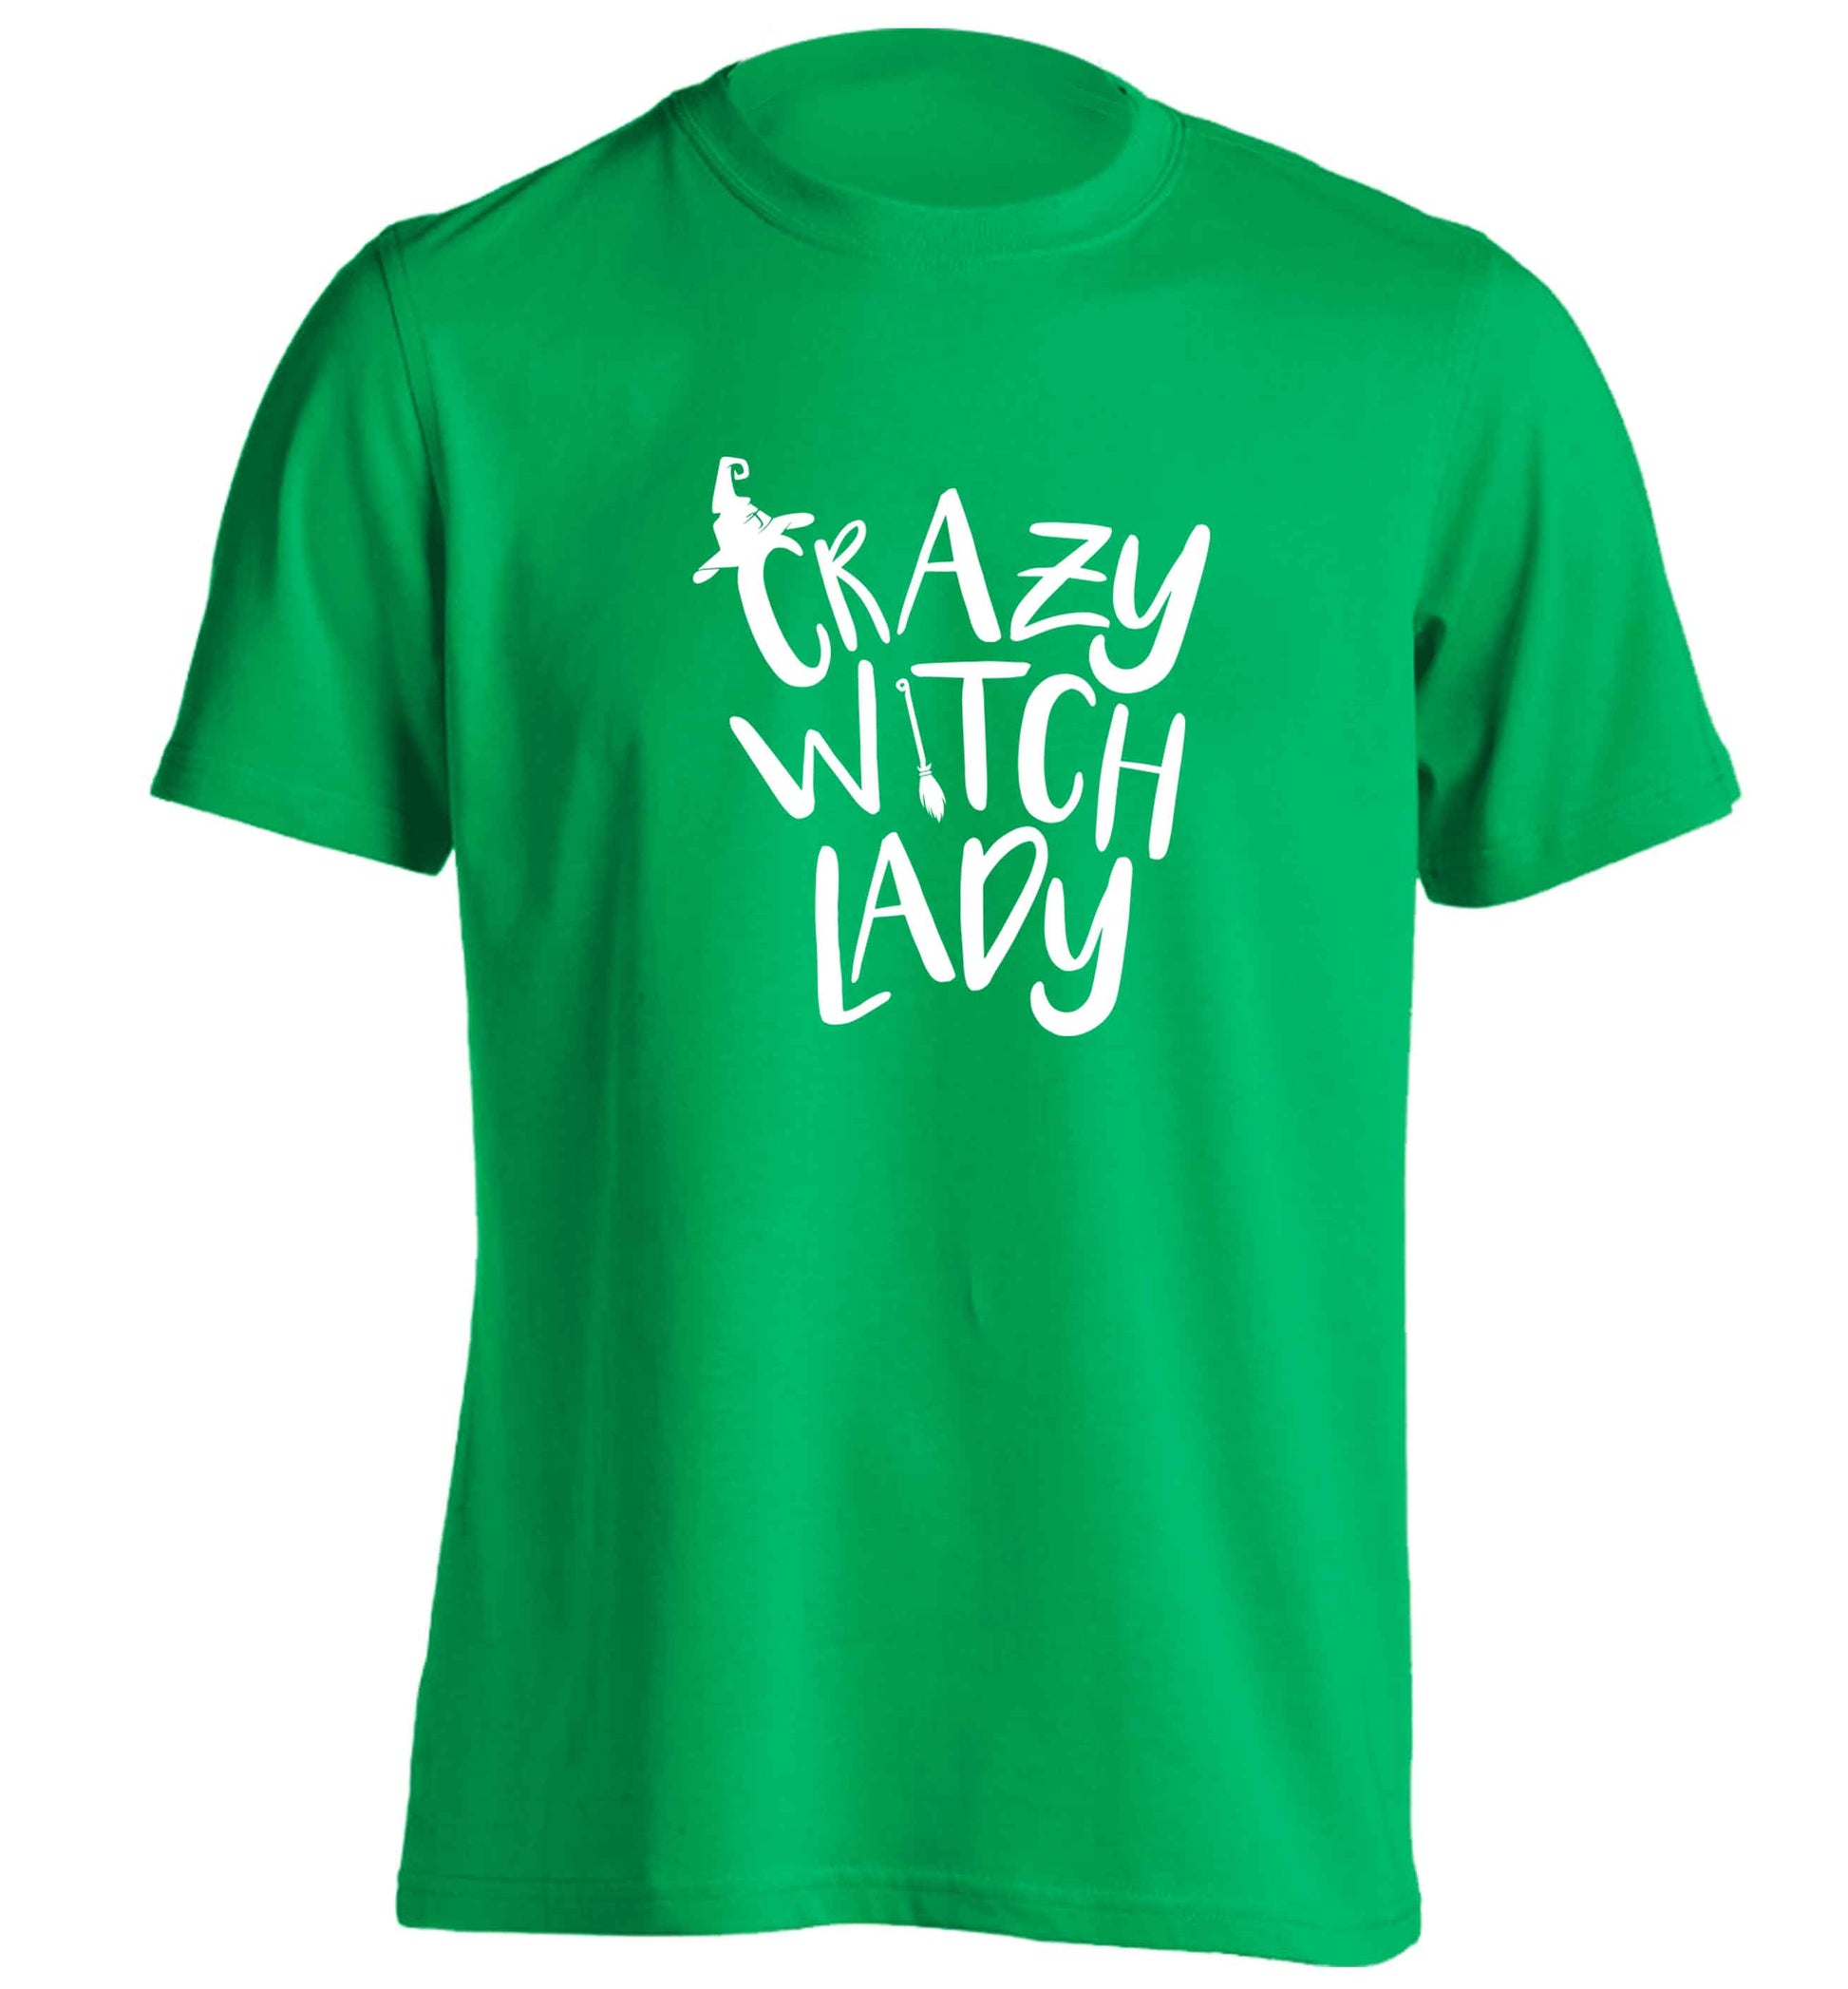 Crazy witch lady adults unisex green Tshirt 2XL